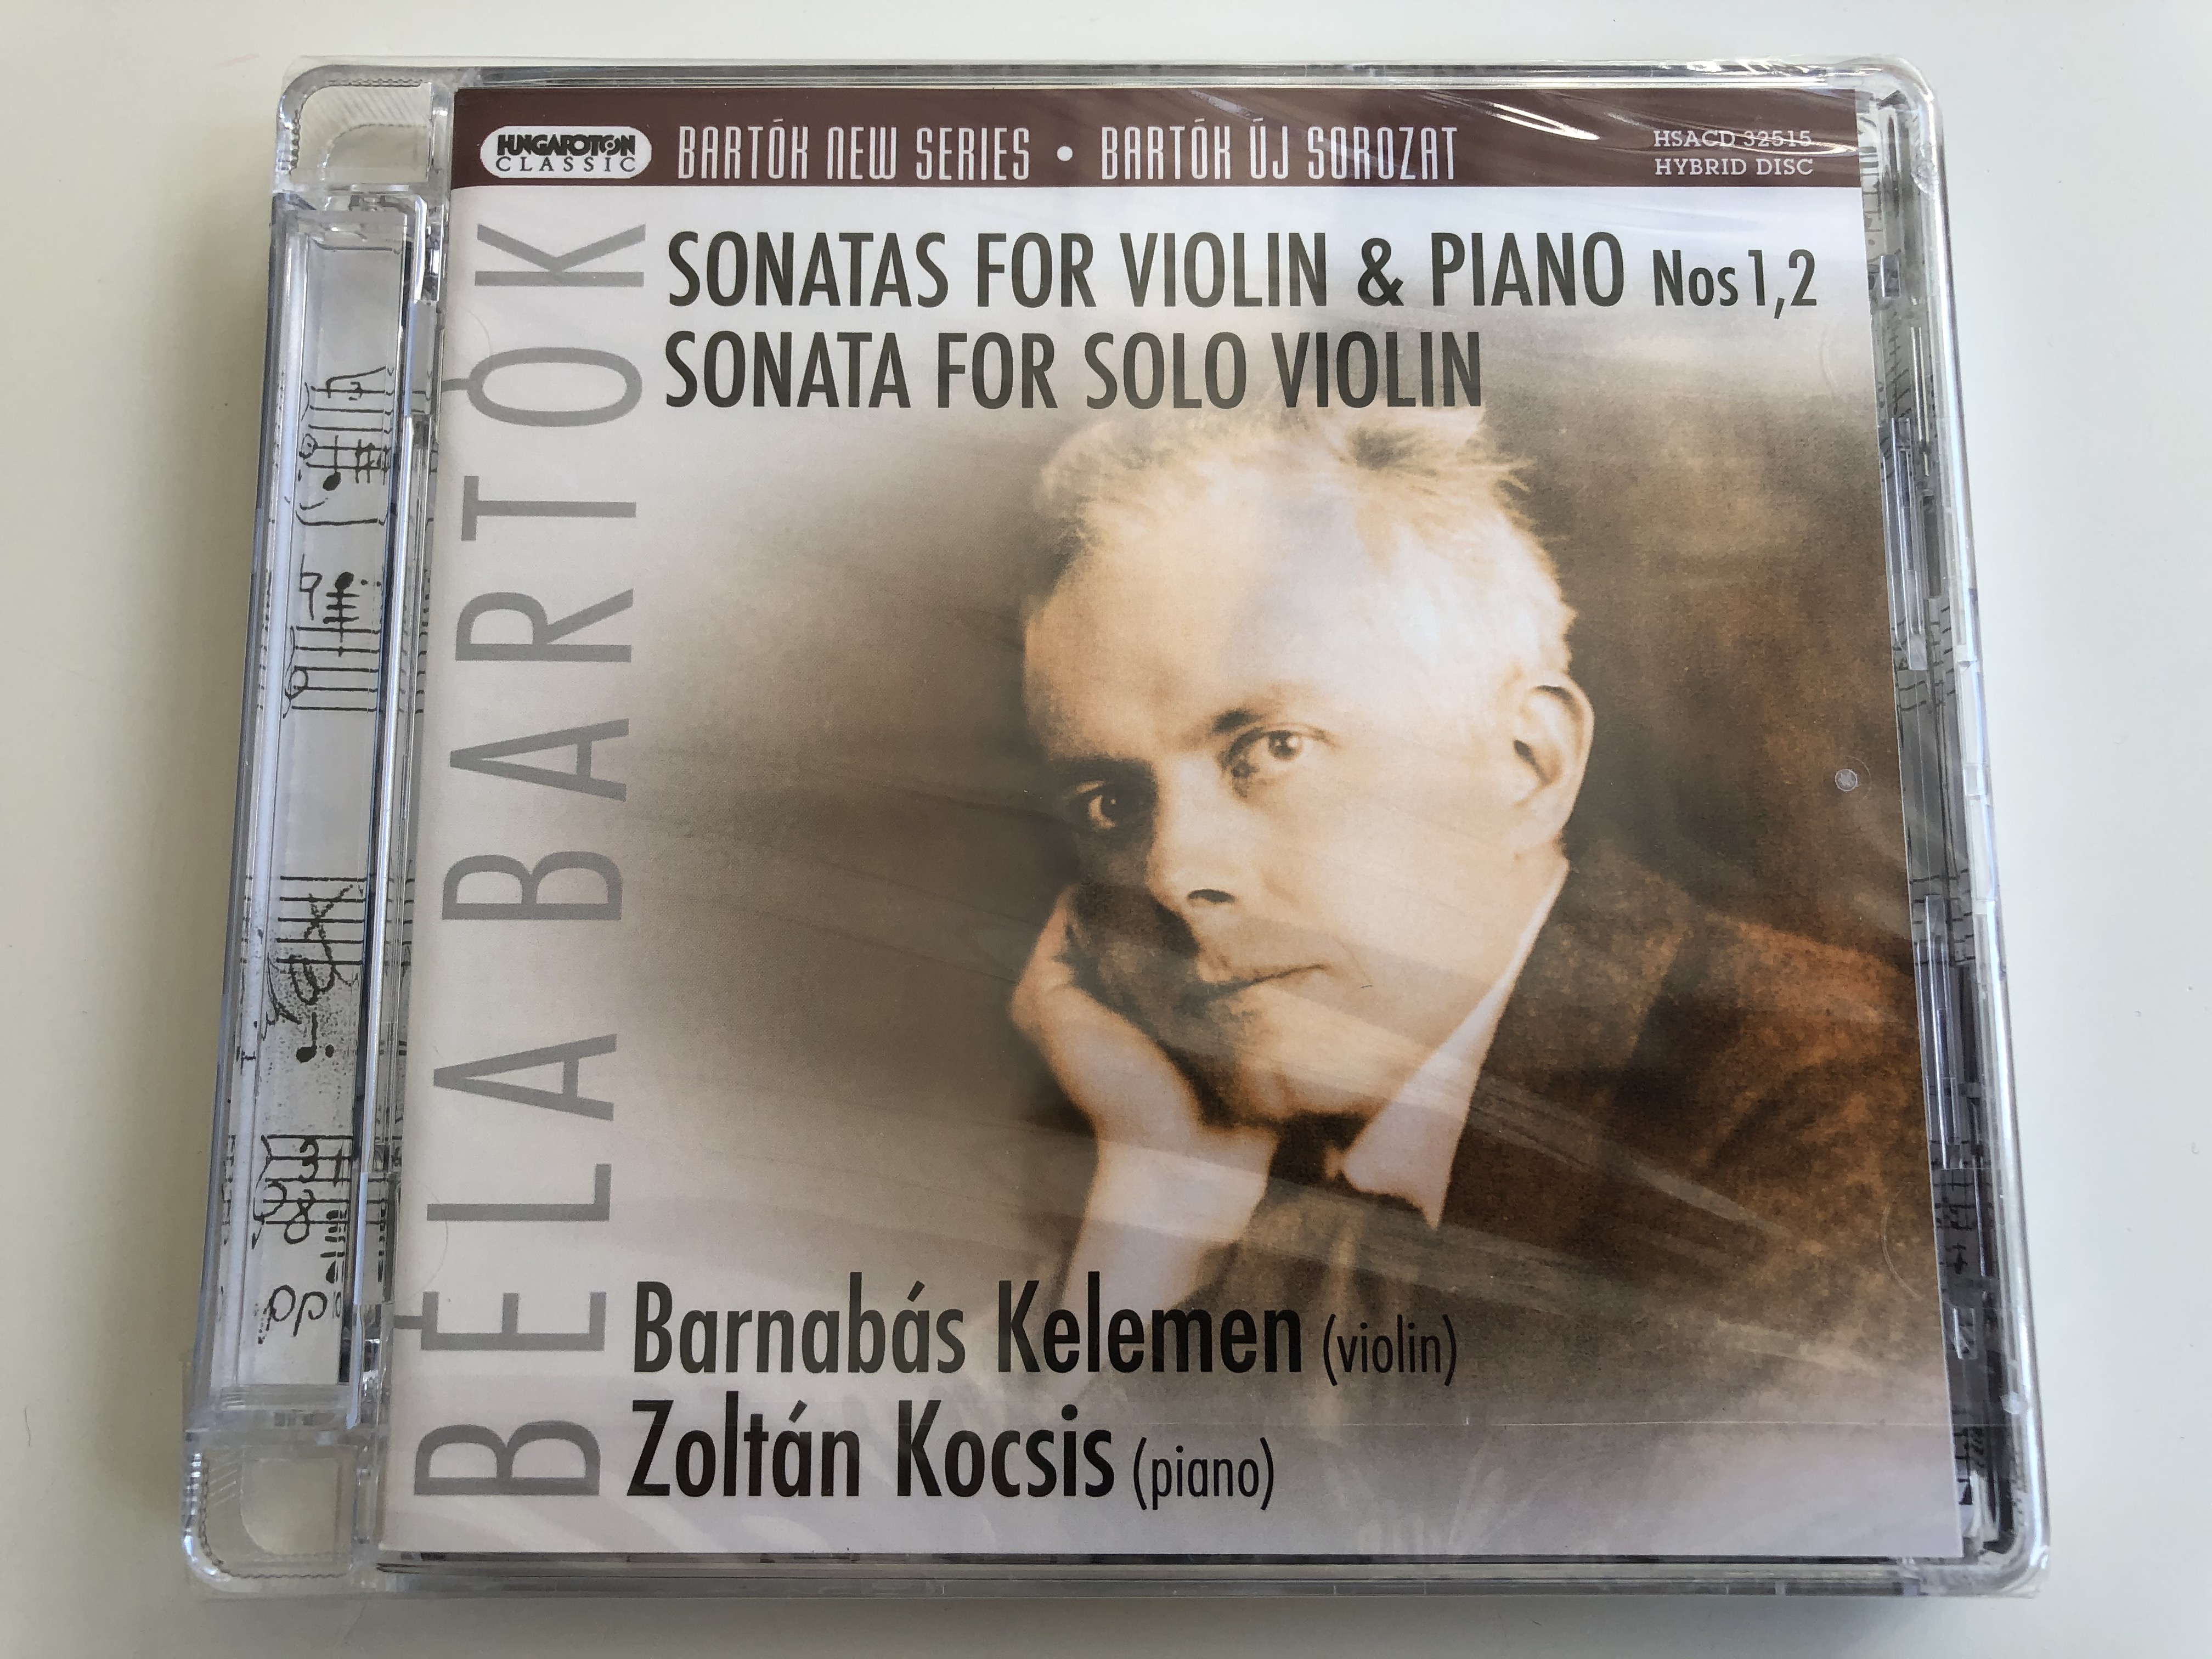 bela-bart-k-sonatas-for-violin-piano-nos-1-2-sonata-for-solo-violin-barnab-s-kelemen-violin-zolt-n-kocsis-piano-bart-k-new-series-hungaroton-classic-hybrid-disc-2012-hsacd-32515-1-.jpg